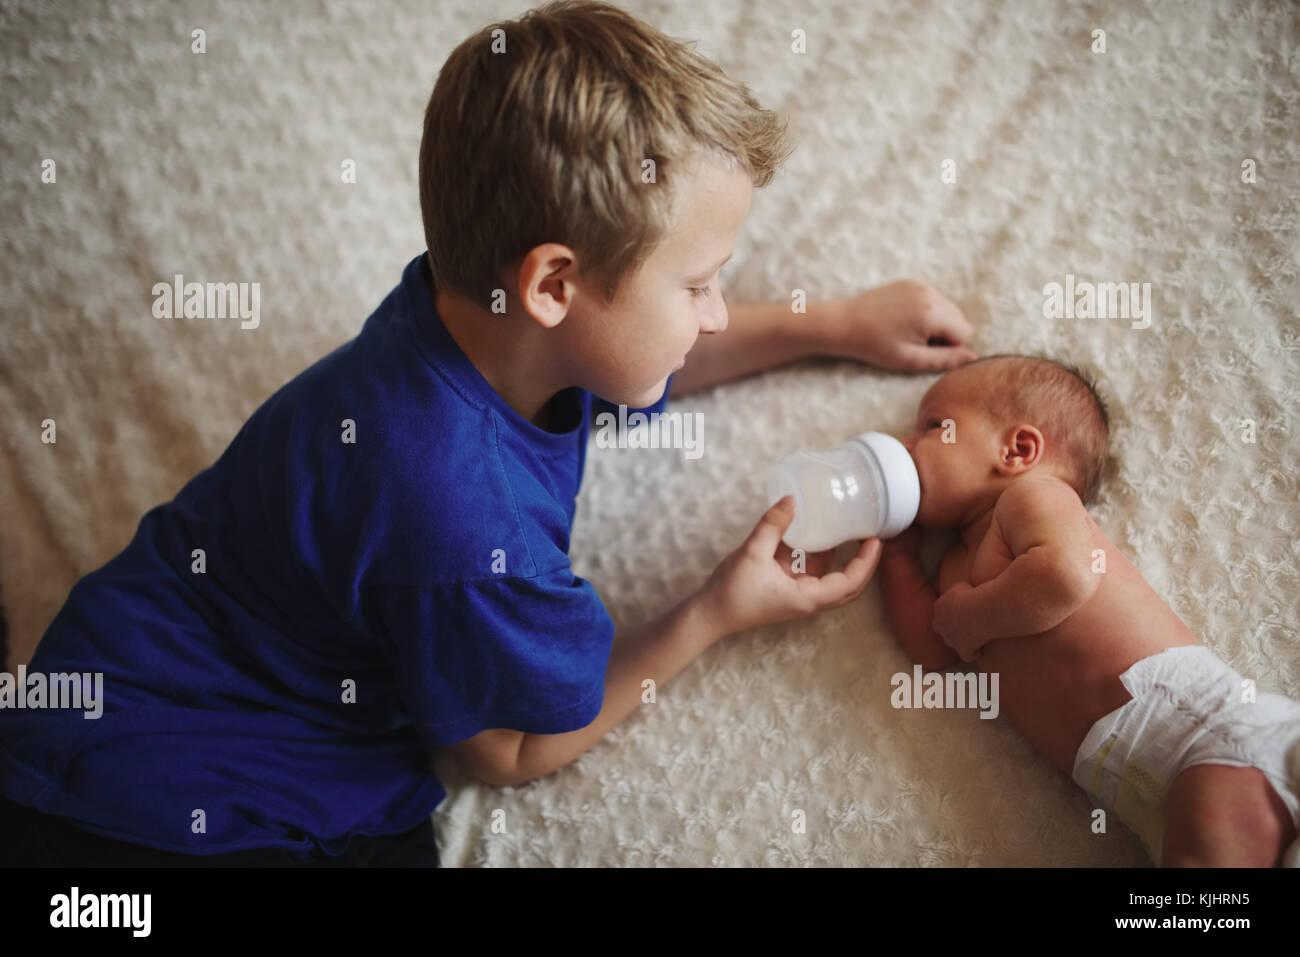 https://c8.alamy.com/comp/KJHRN5/boy-feeding-newborn-baby-with-bottle-of-milk-KJHRN5.jpg